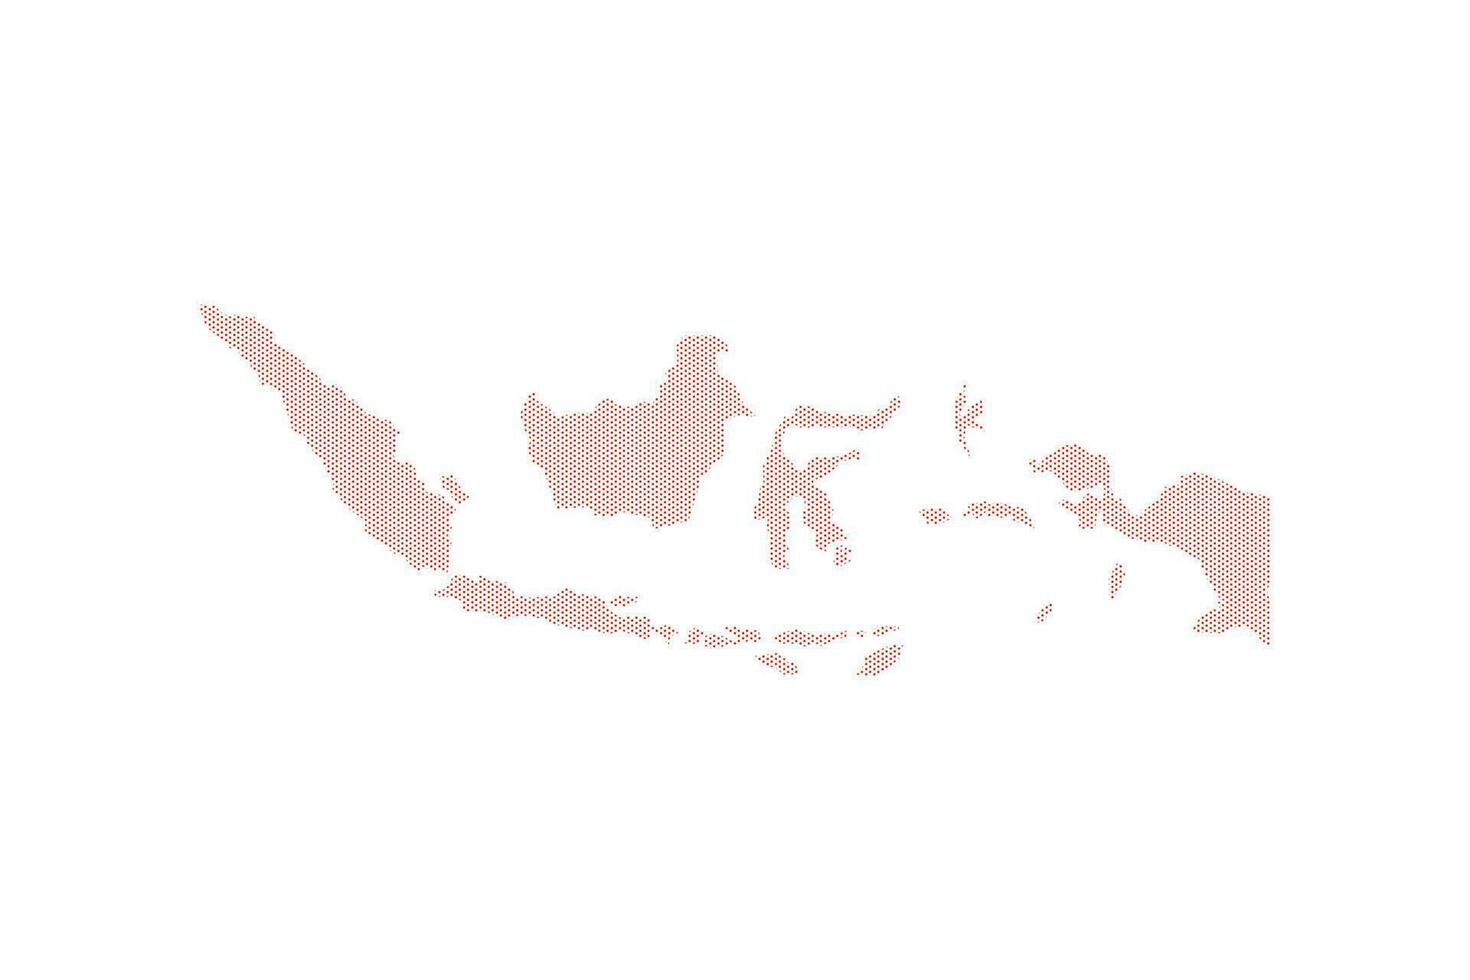 Indonesien Illustration im Vektor